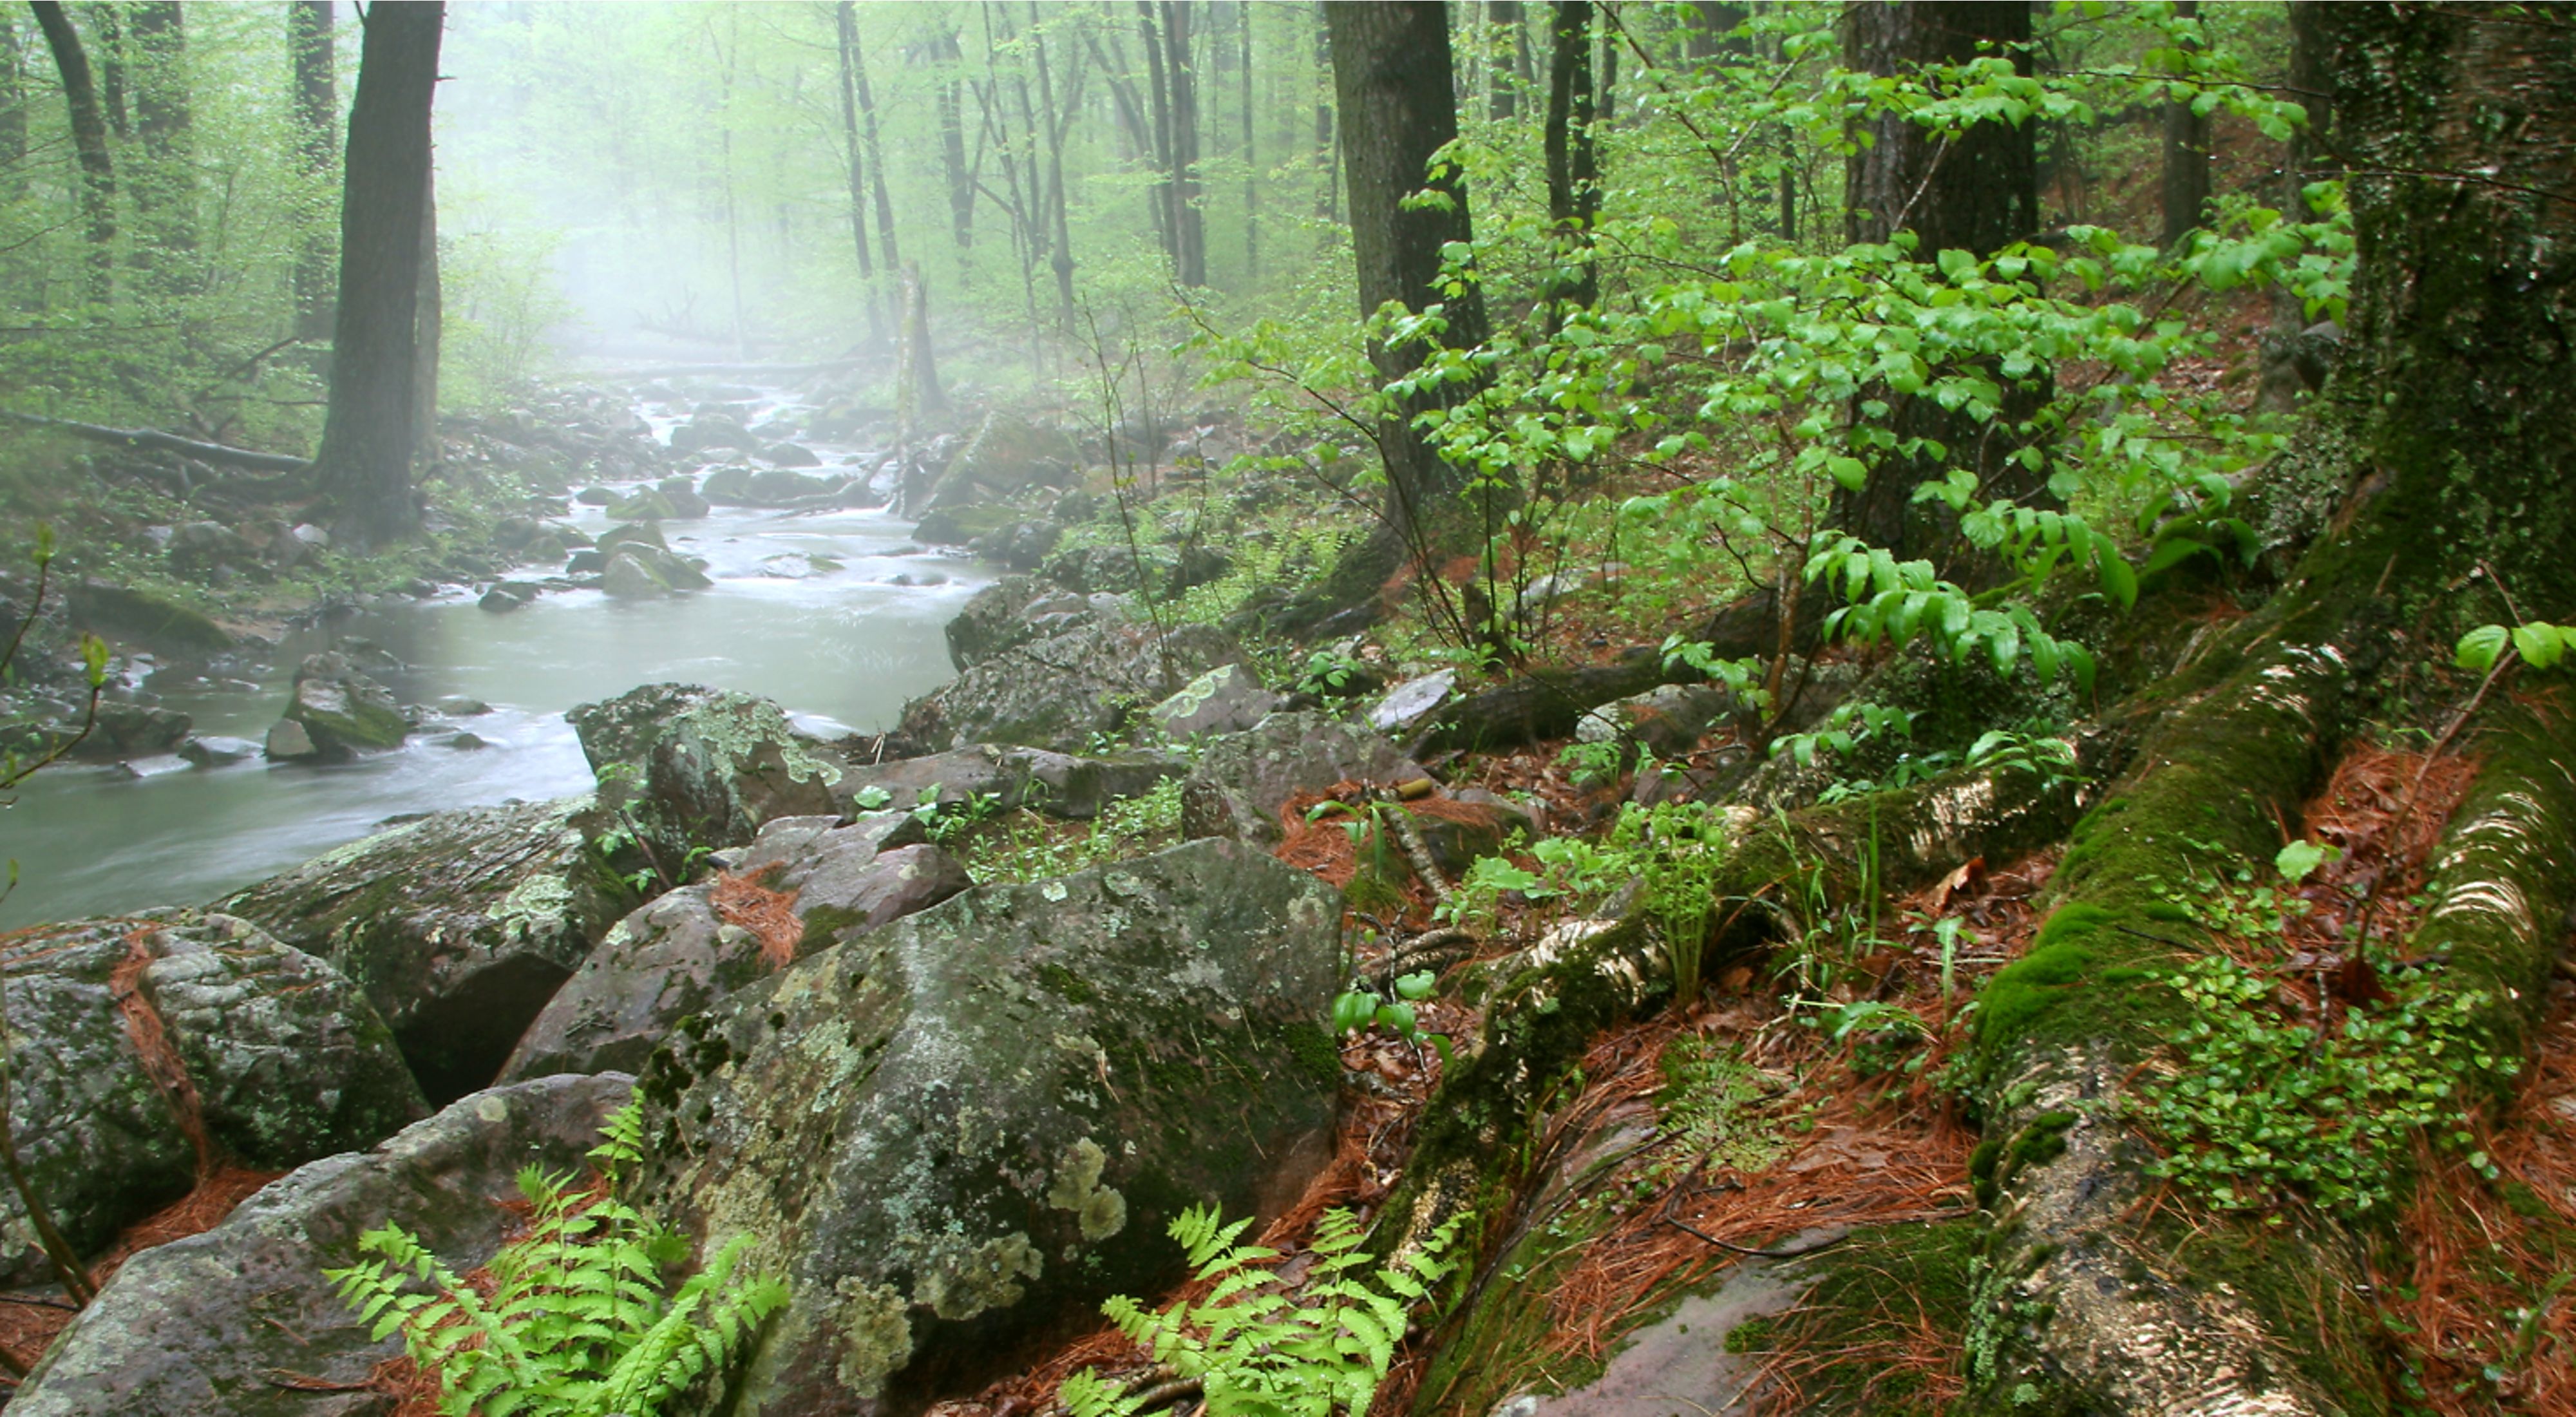 A stream running through a forest.